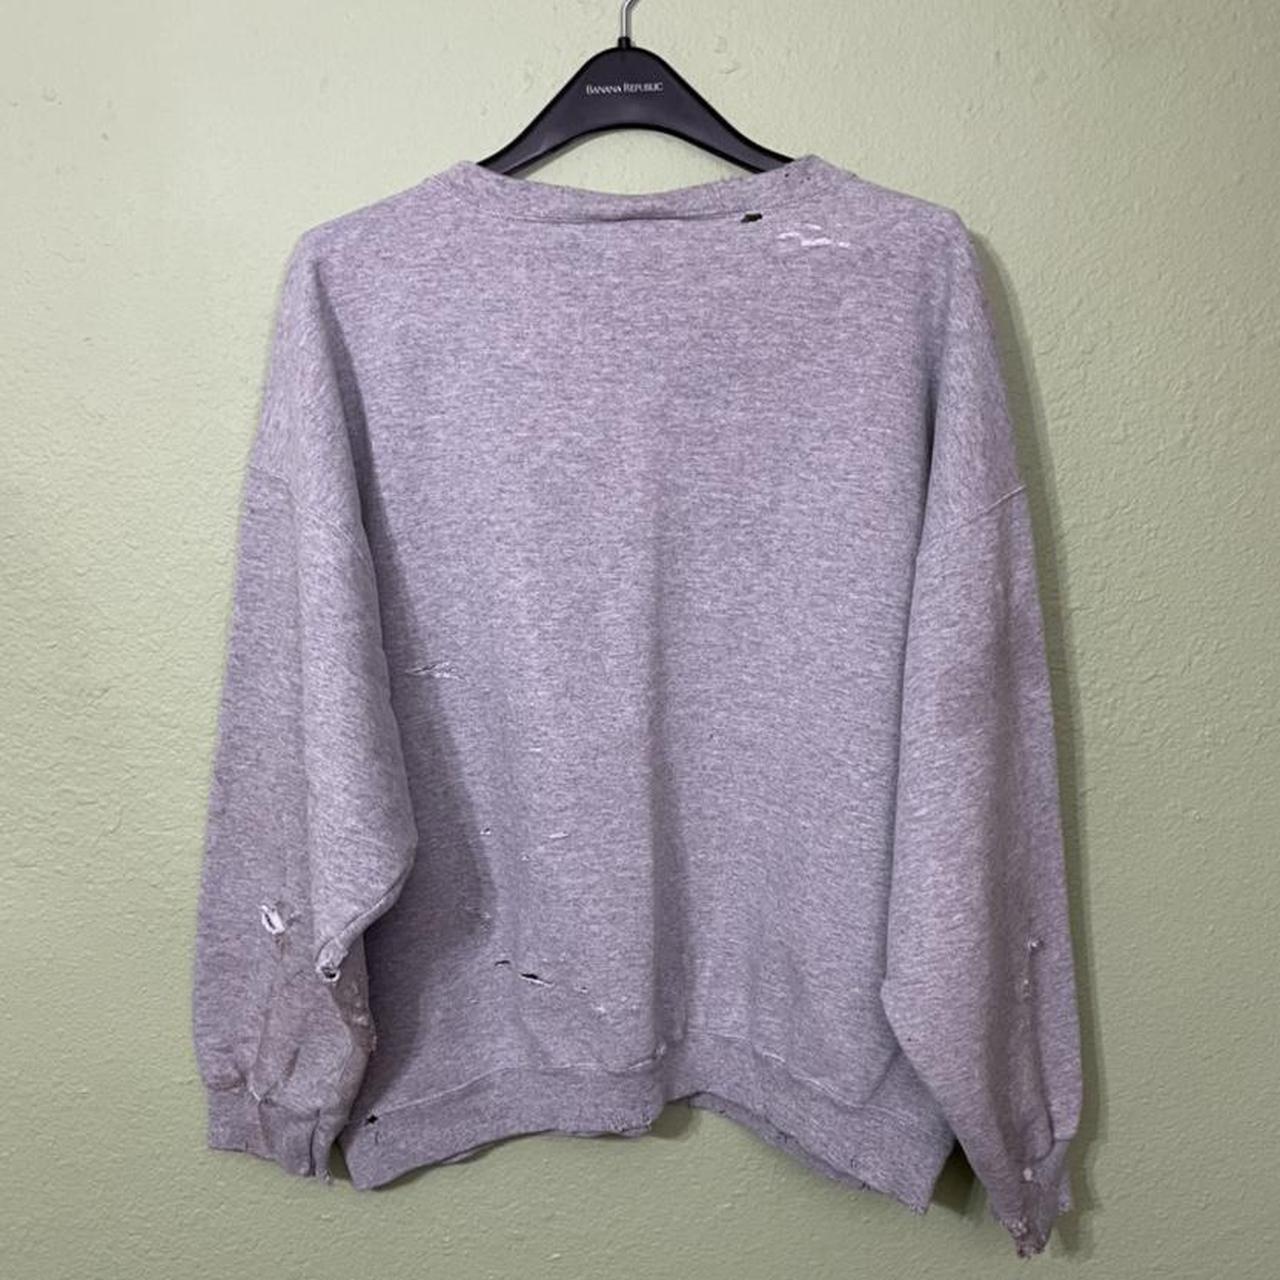 Product Image 3 - Vintage 90’s Reebok grunge sweatshirt